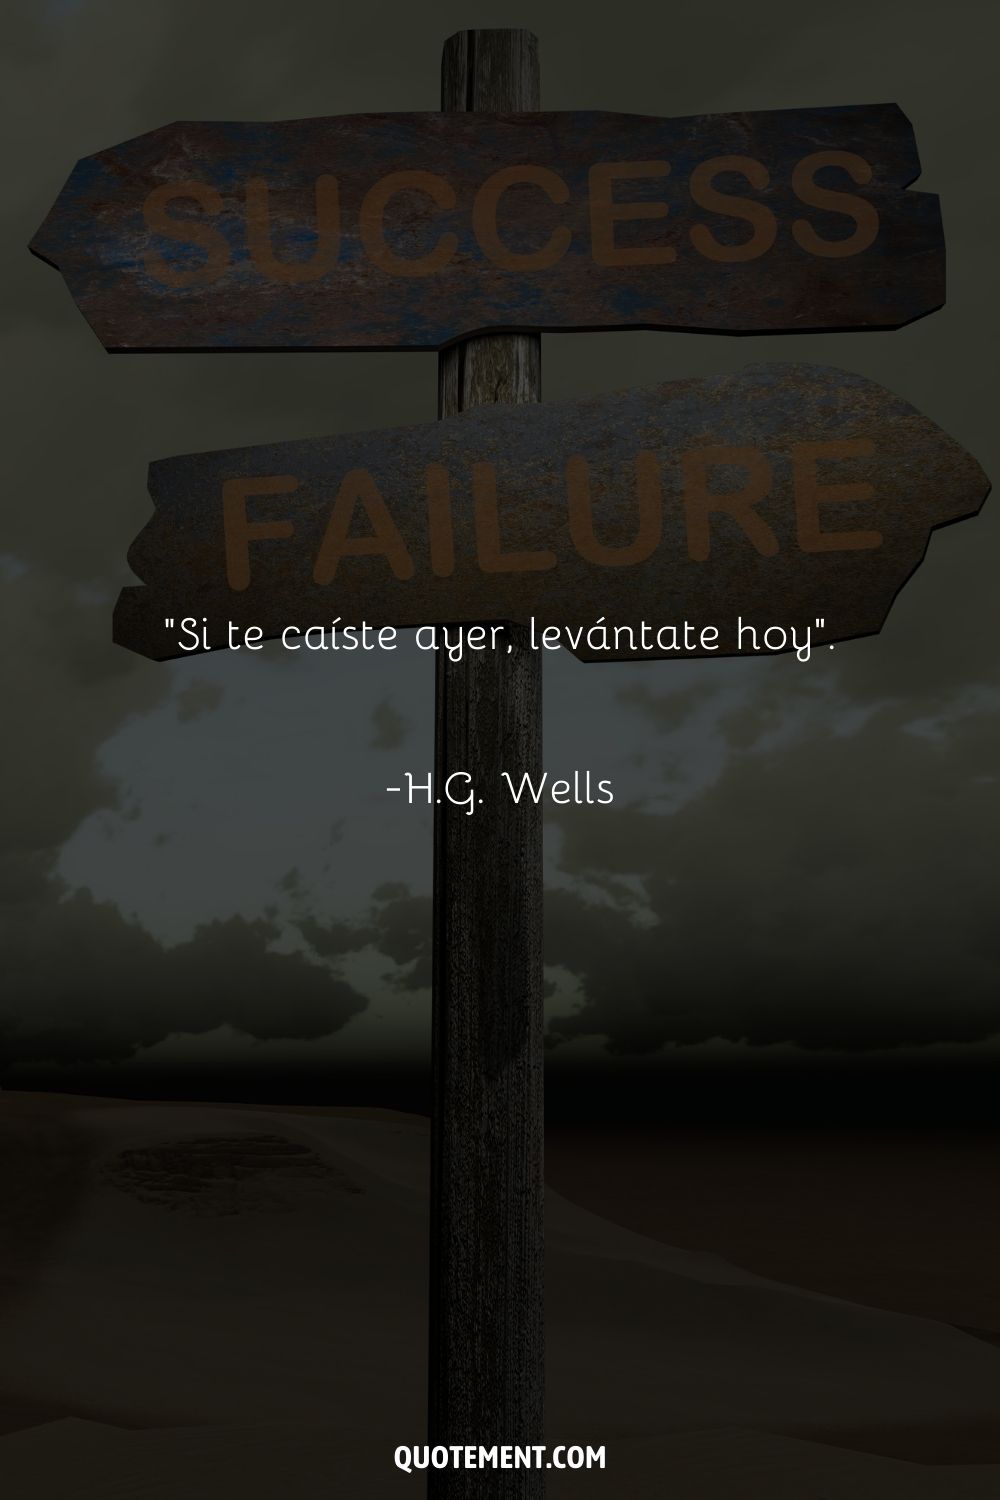 "Si te caíste ayer, levántate hoy". - H.G. Wells